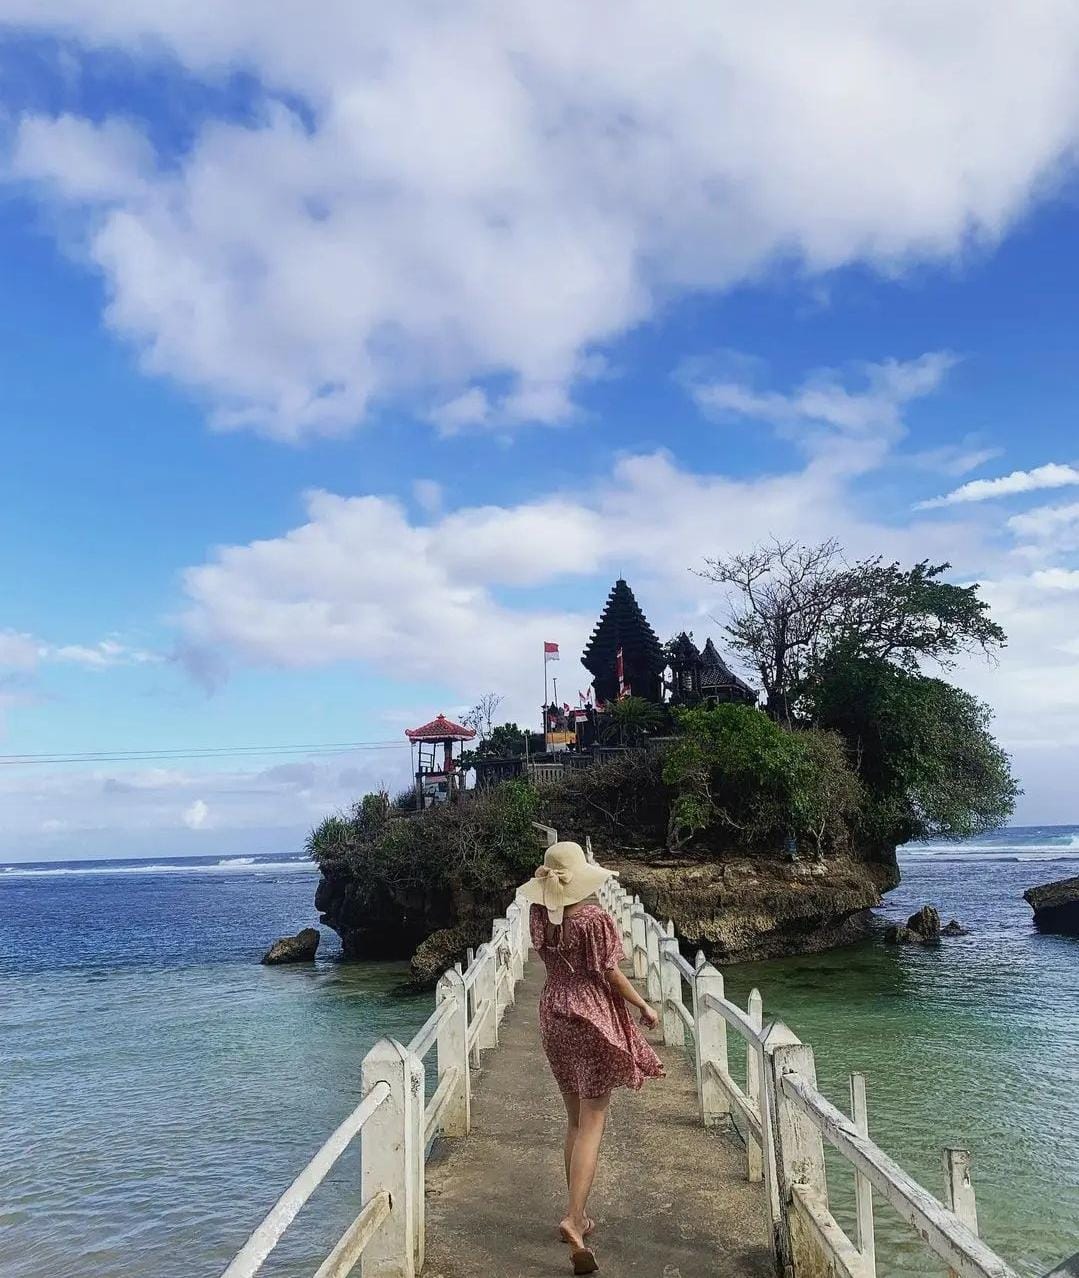 Intip Wisata Pantai Balekambang Malang, Pesona Indah Seperti di Bali